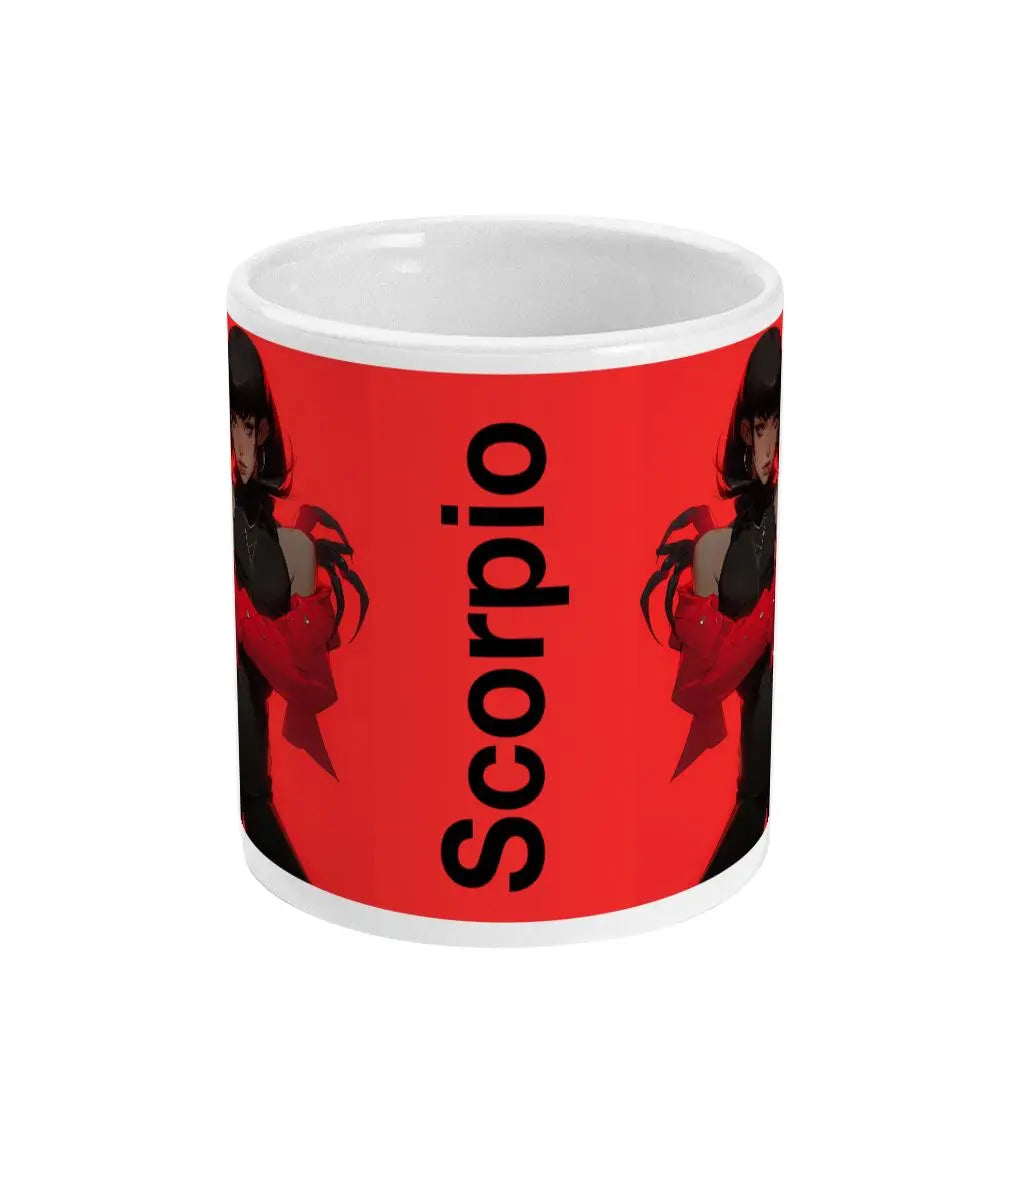 Scorpio Anime Inspired Mug - Dive into Intensity Cherchez La Femme brand